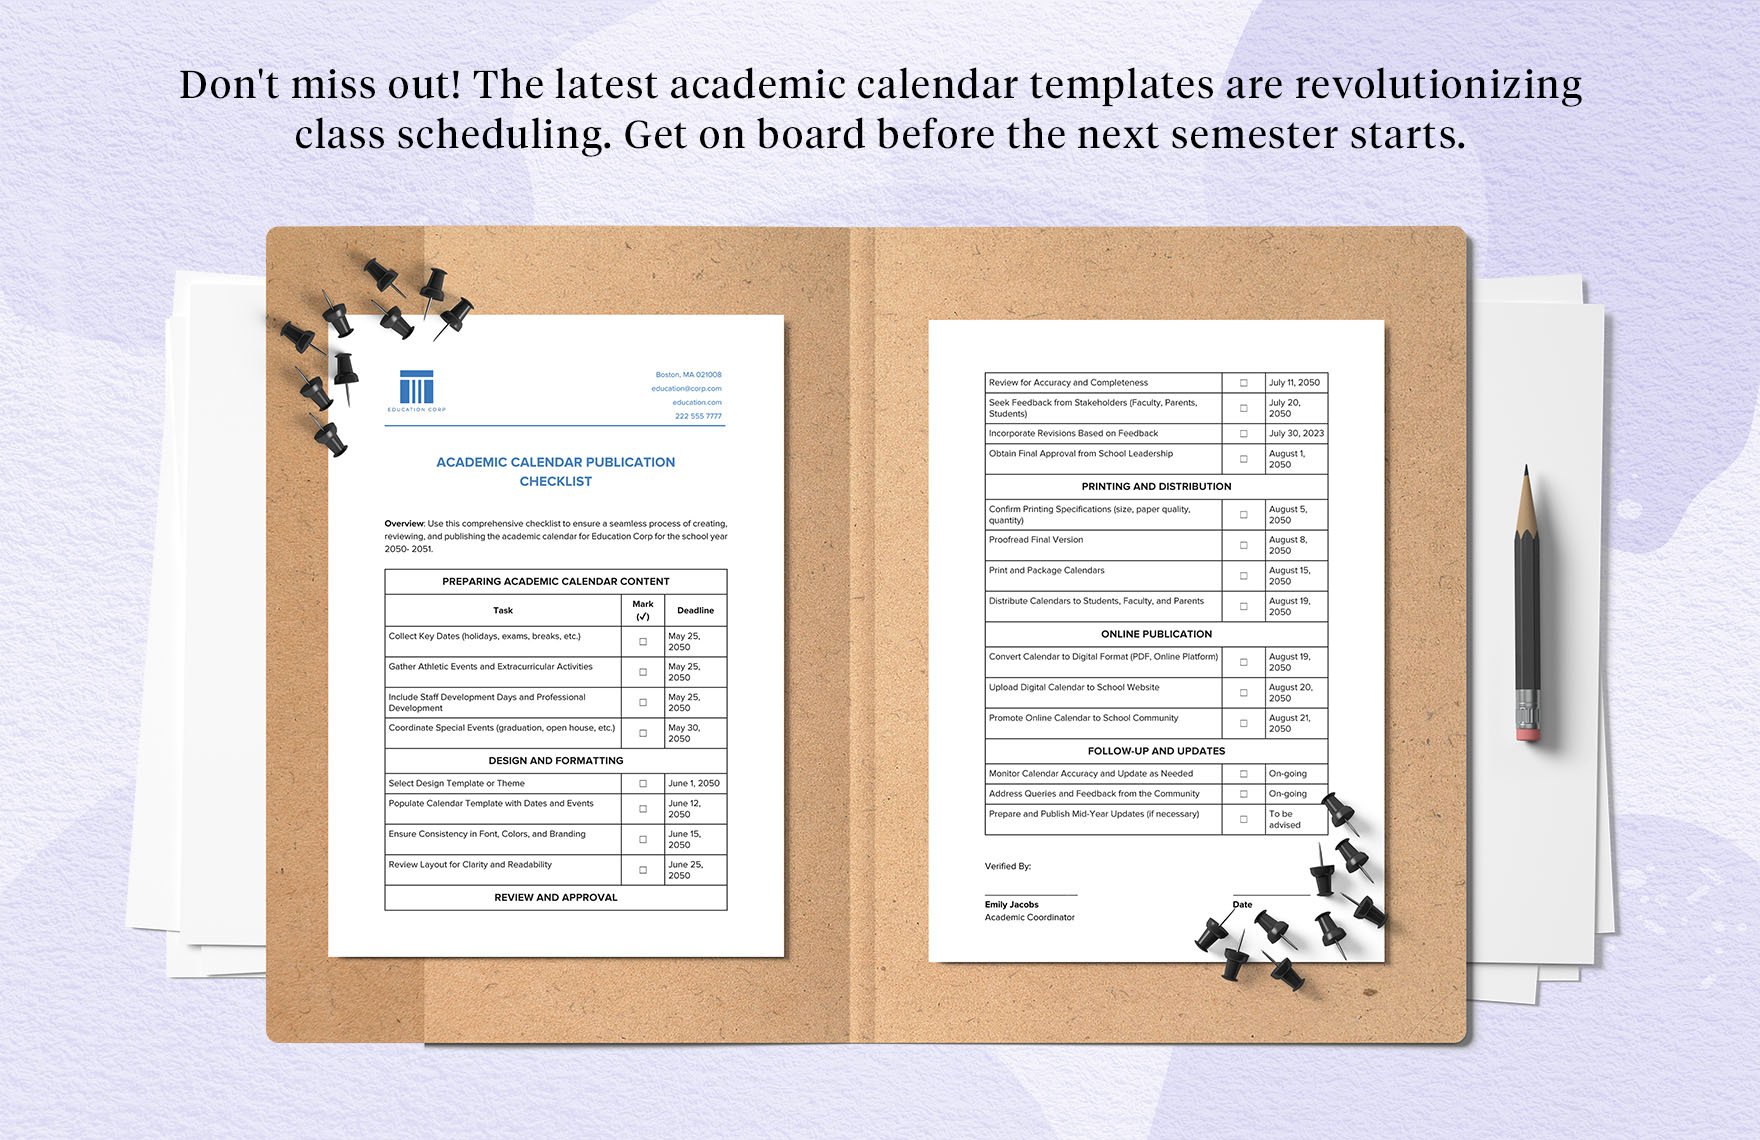 Academic Calendar Publication Checklist Template